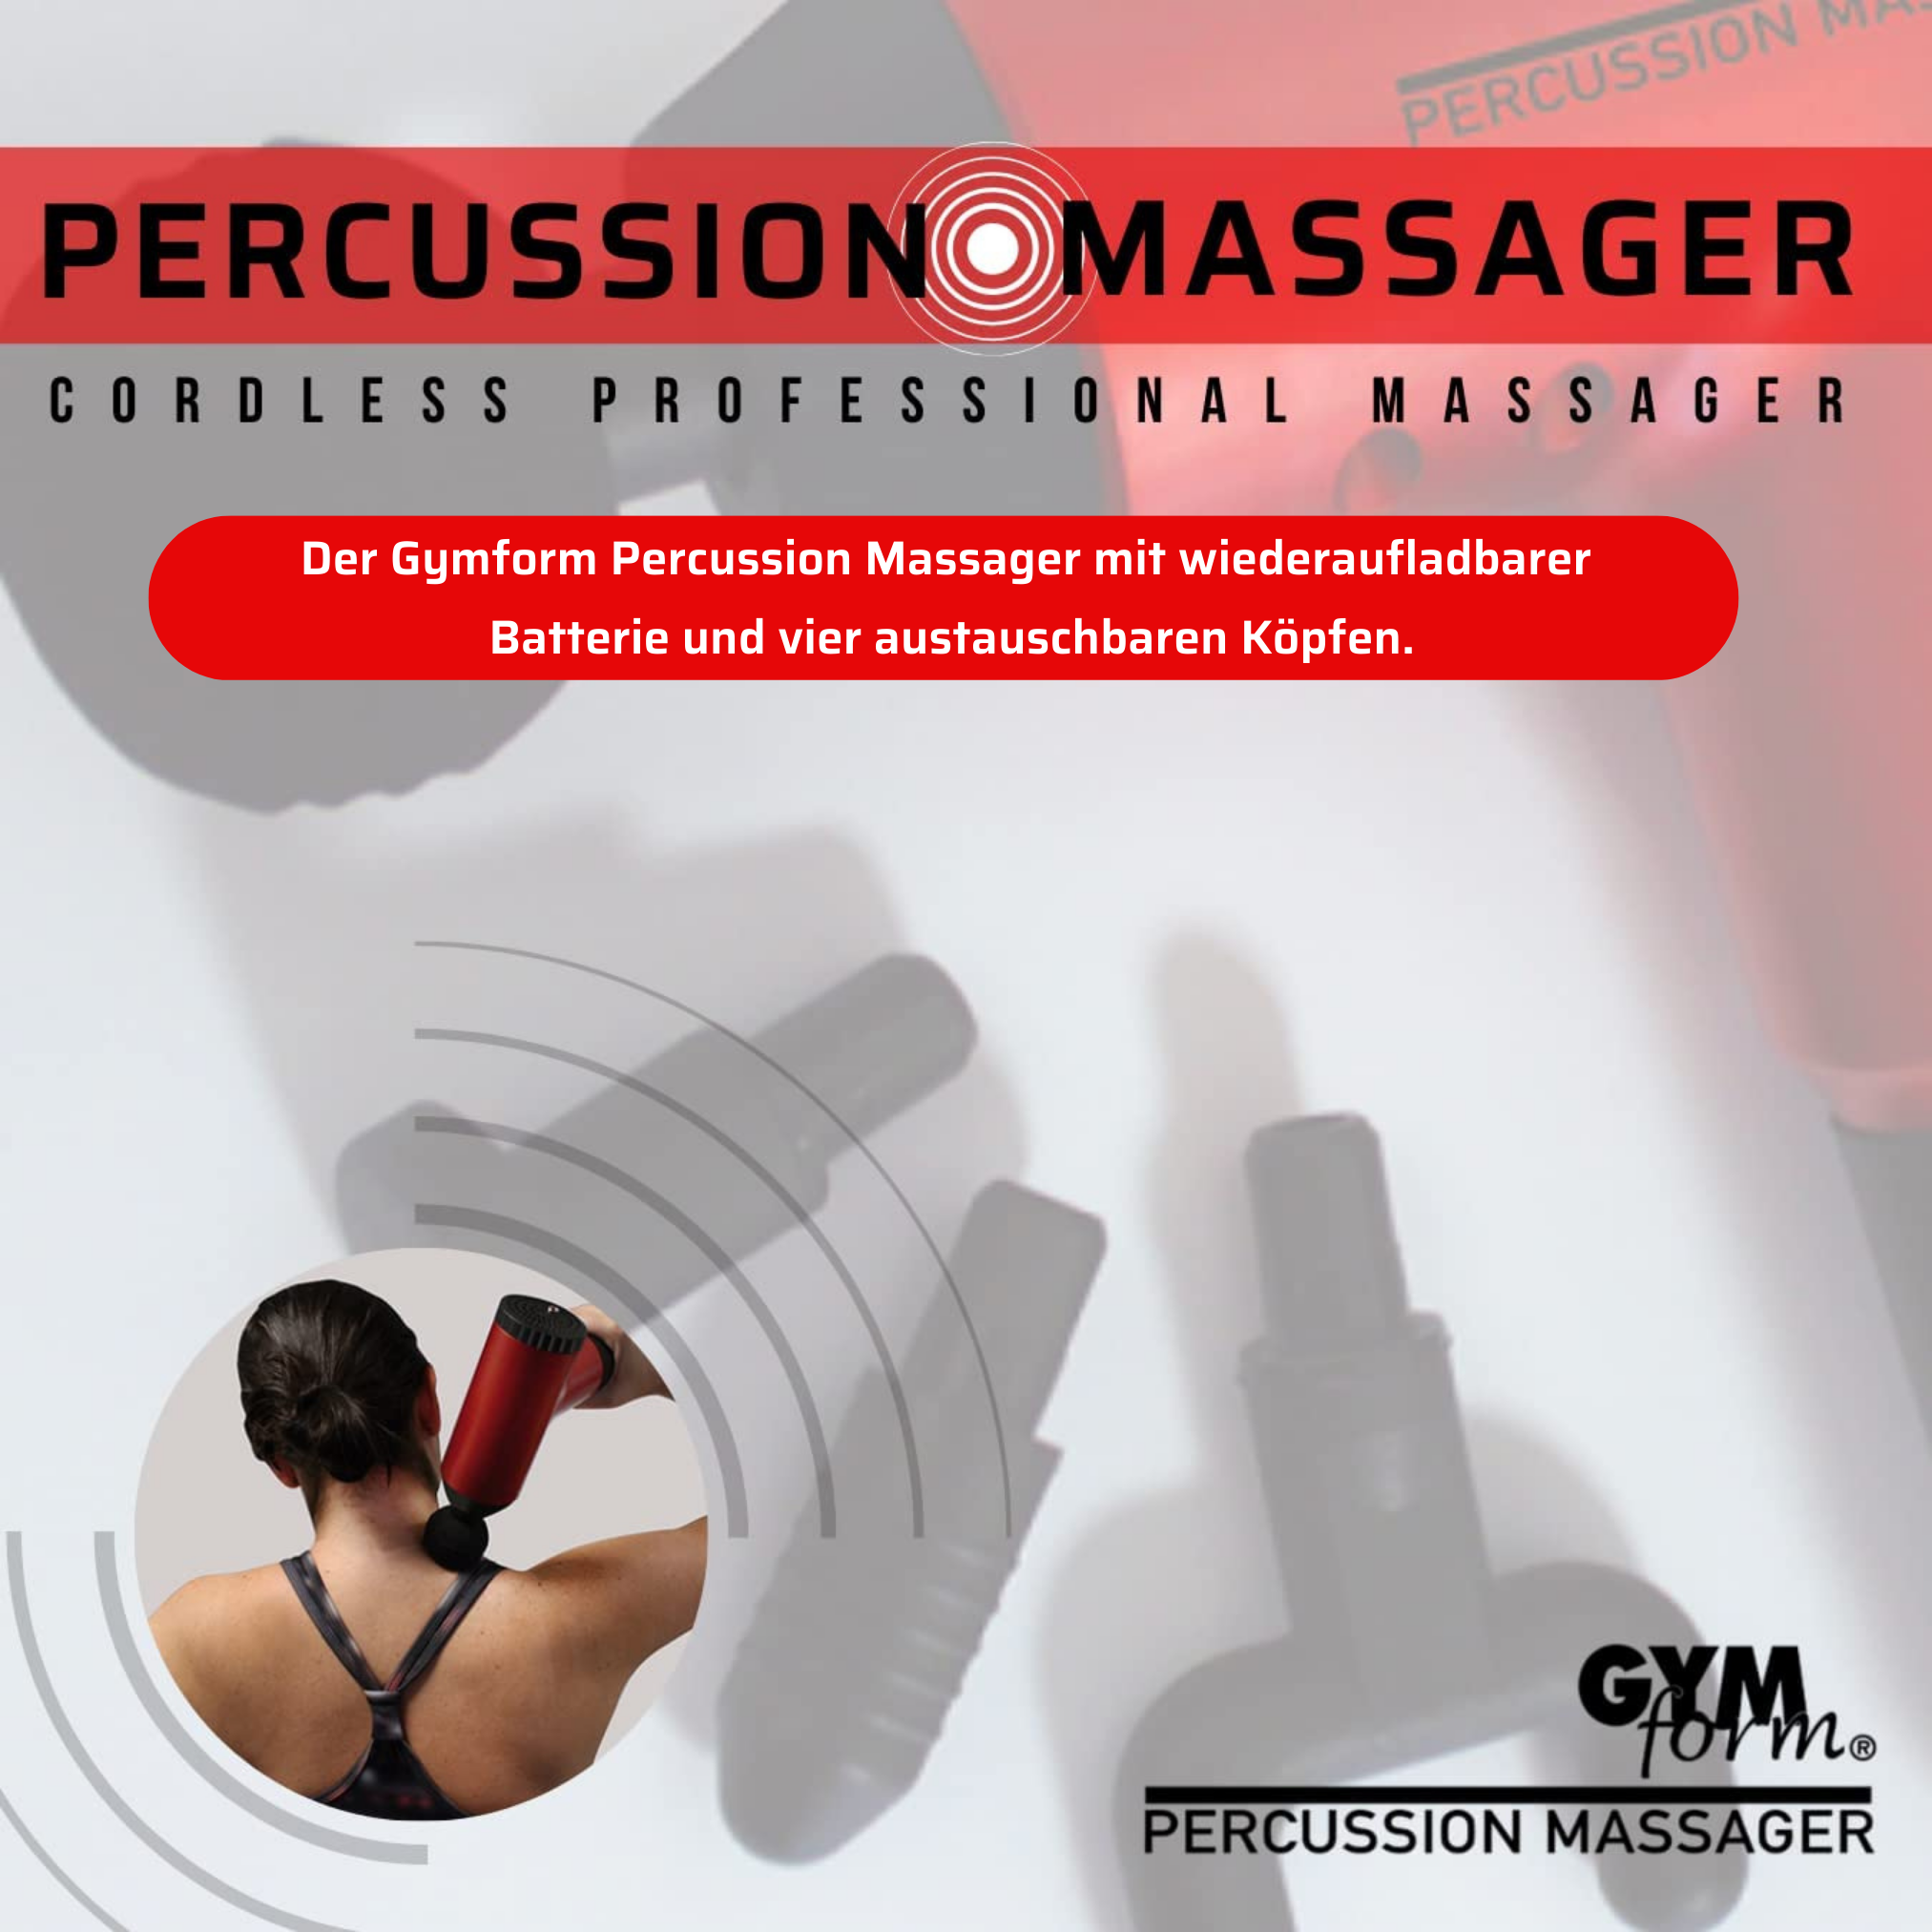 Percussion Cushion Massagepistole GYMFORM Massage Massager